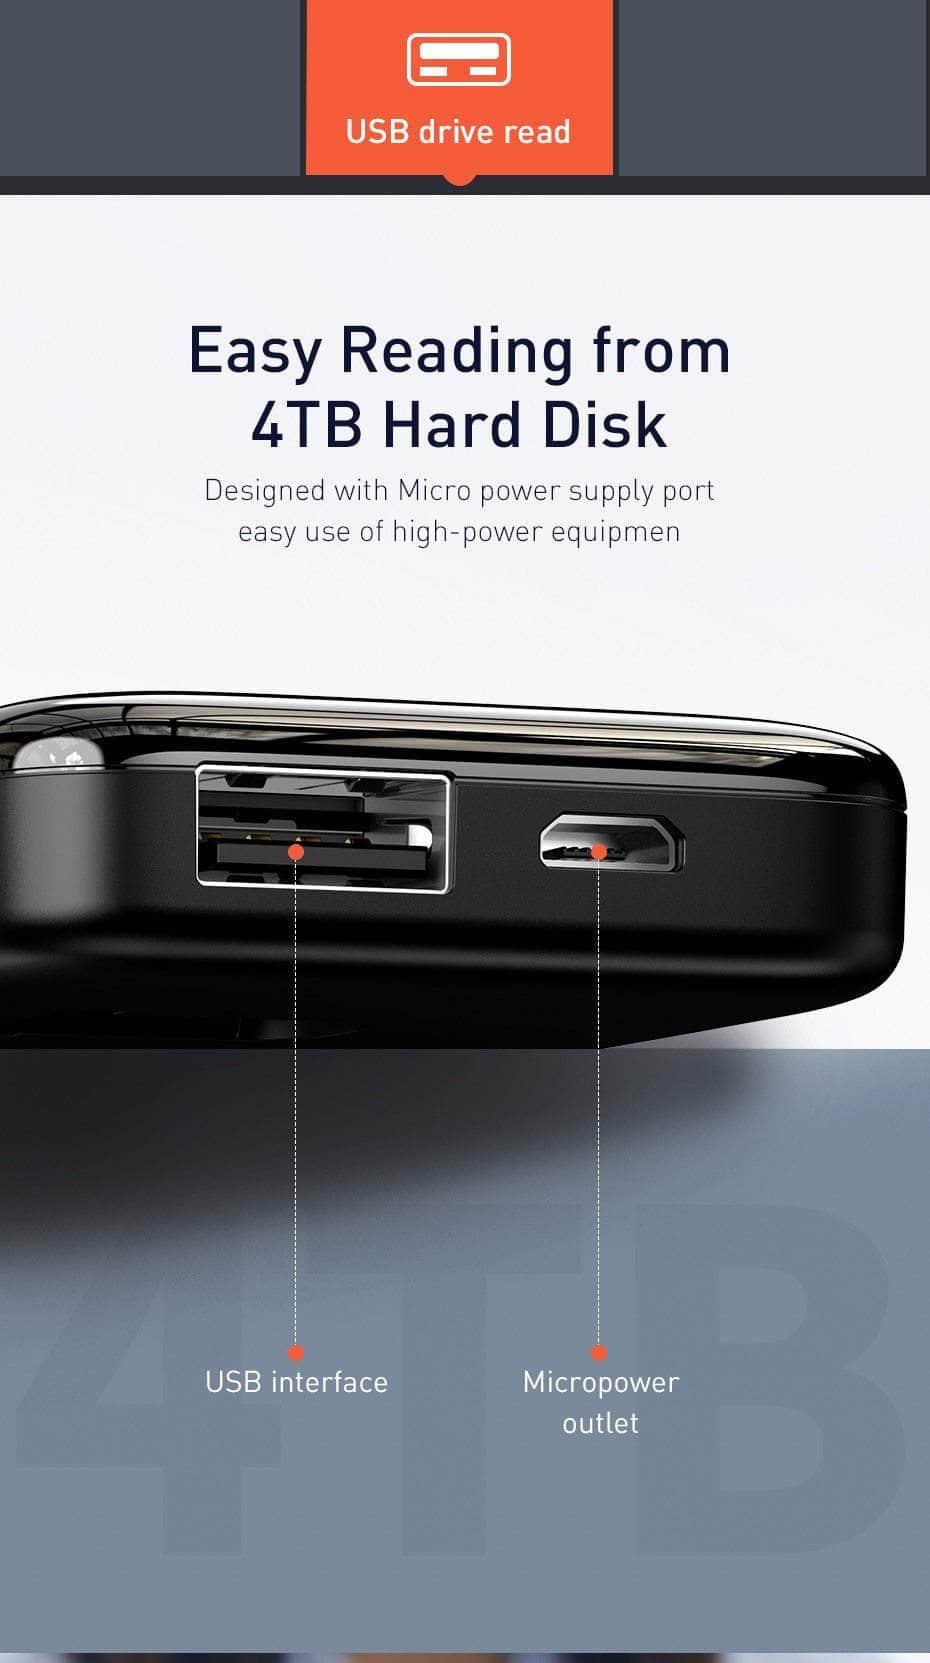 Baseus USB HUB USB C HUB to USB 2.0 for MacBook Pro Air iPad Pro